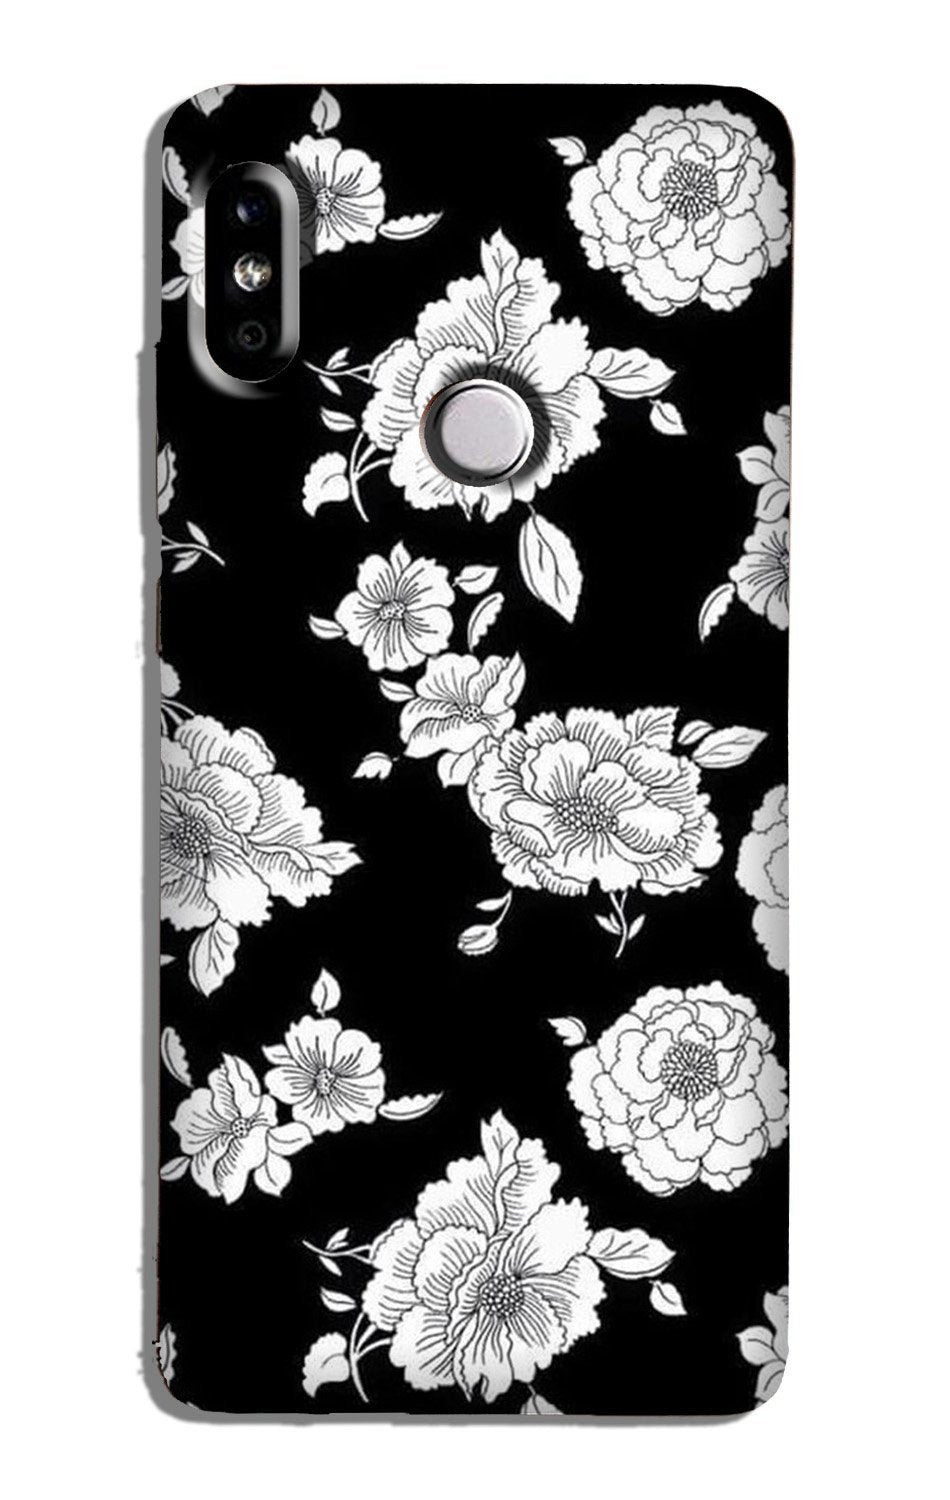 White flowers Black Background Case for Xiaomi Redmi Y3